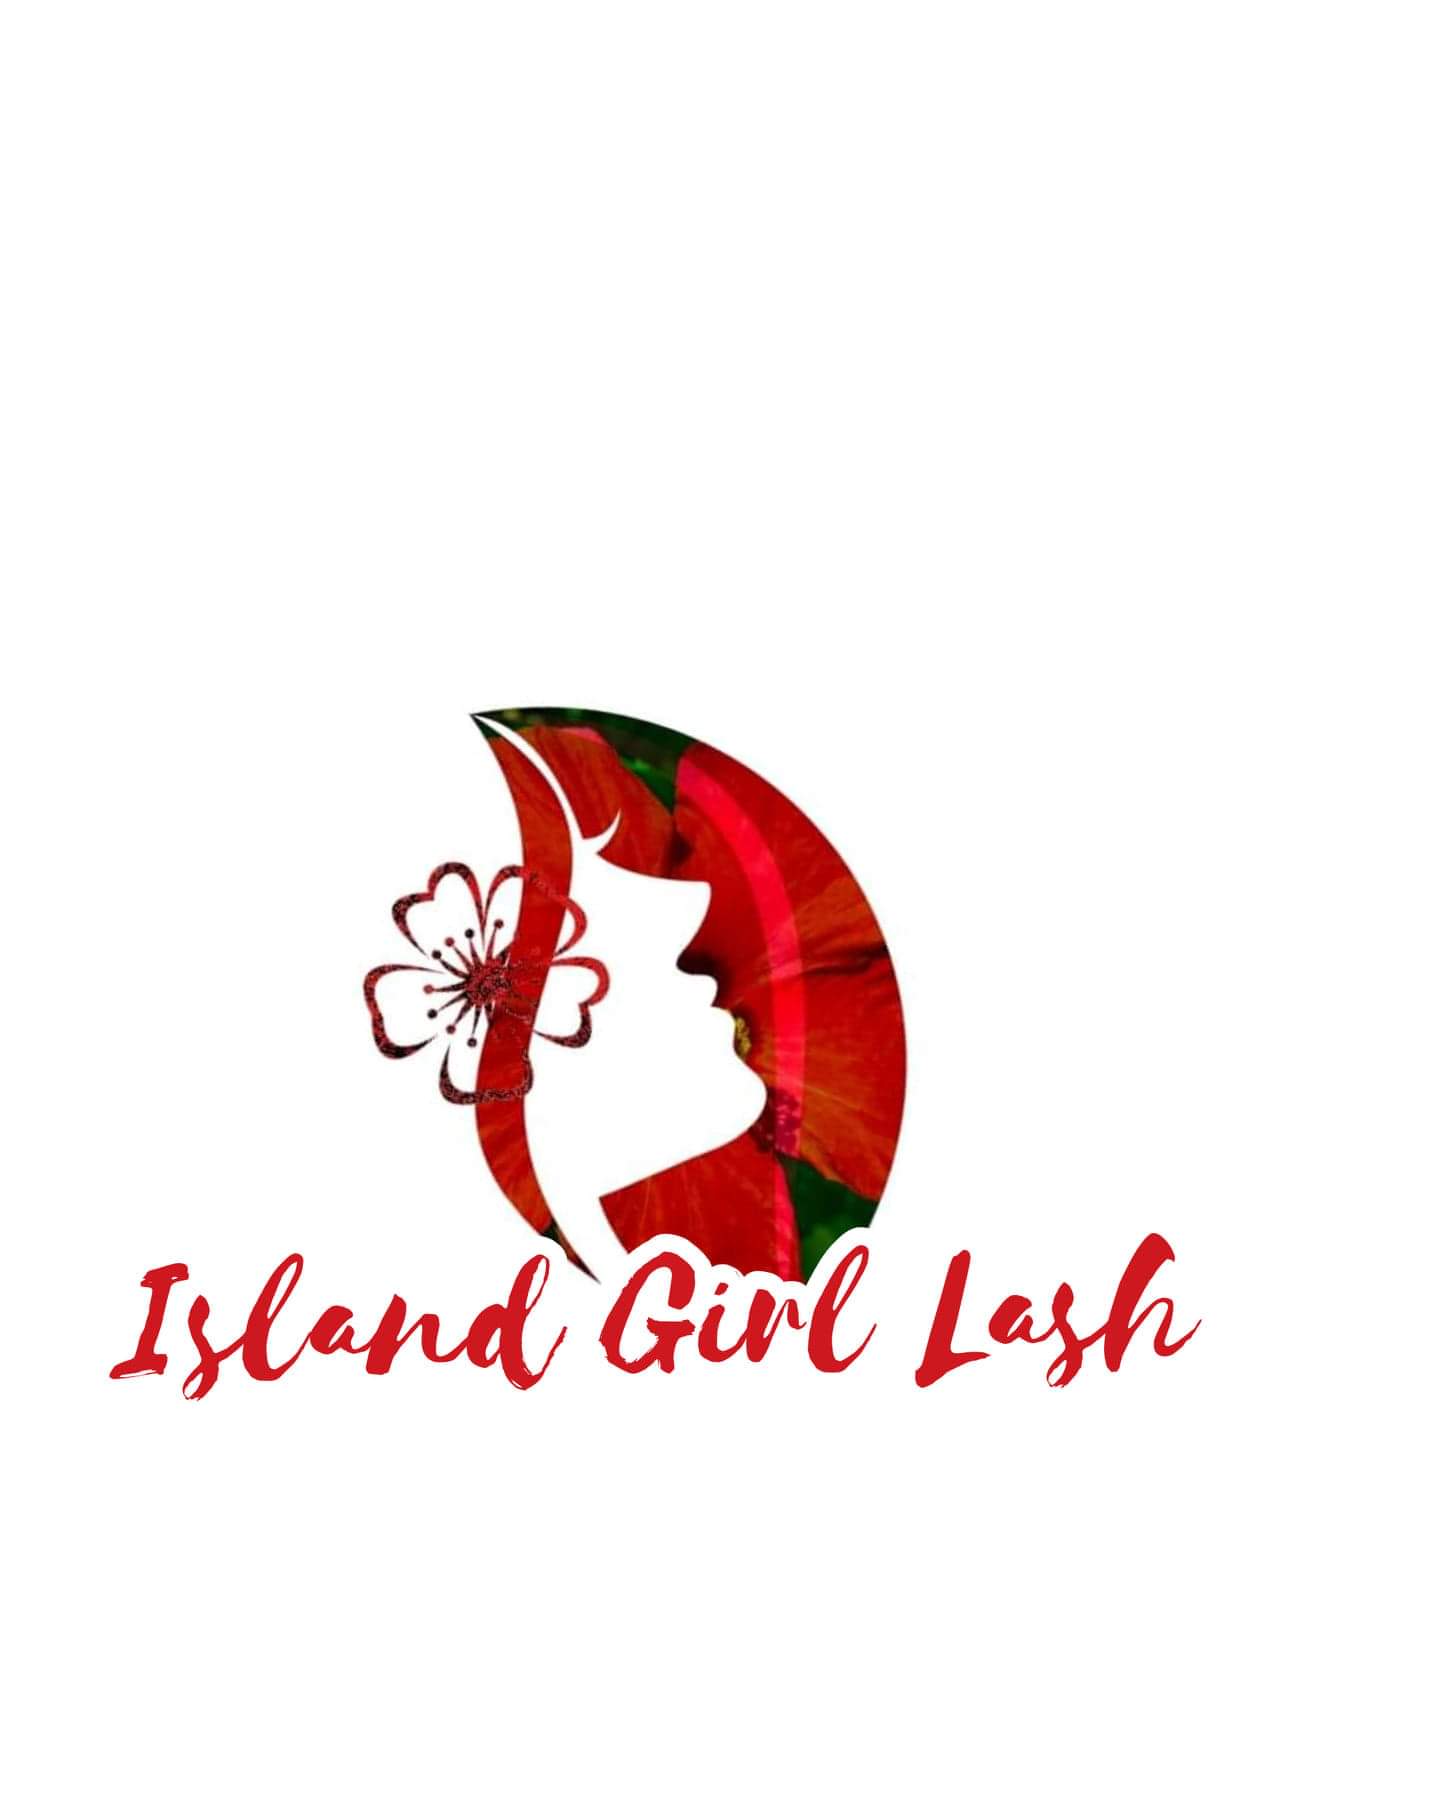 Island Girl Lash